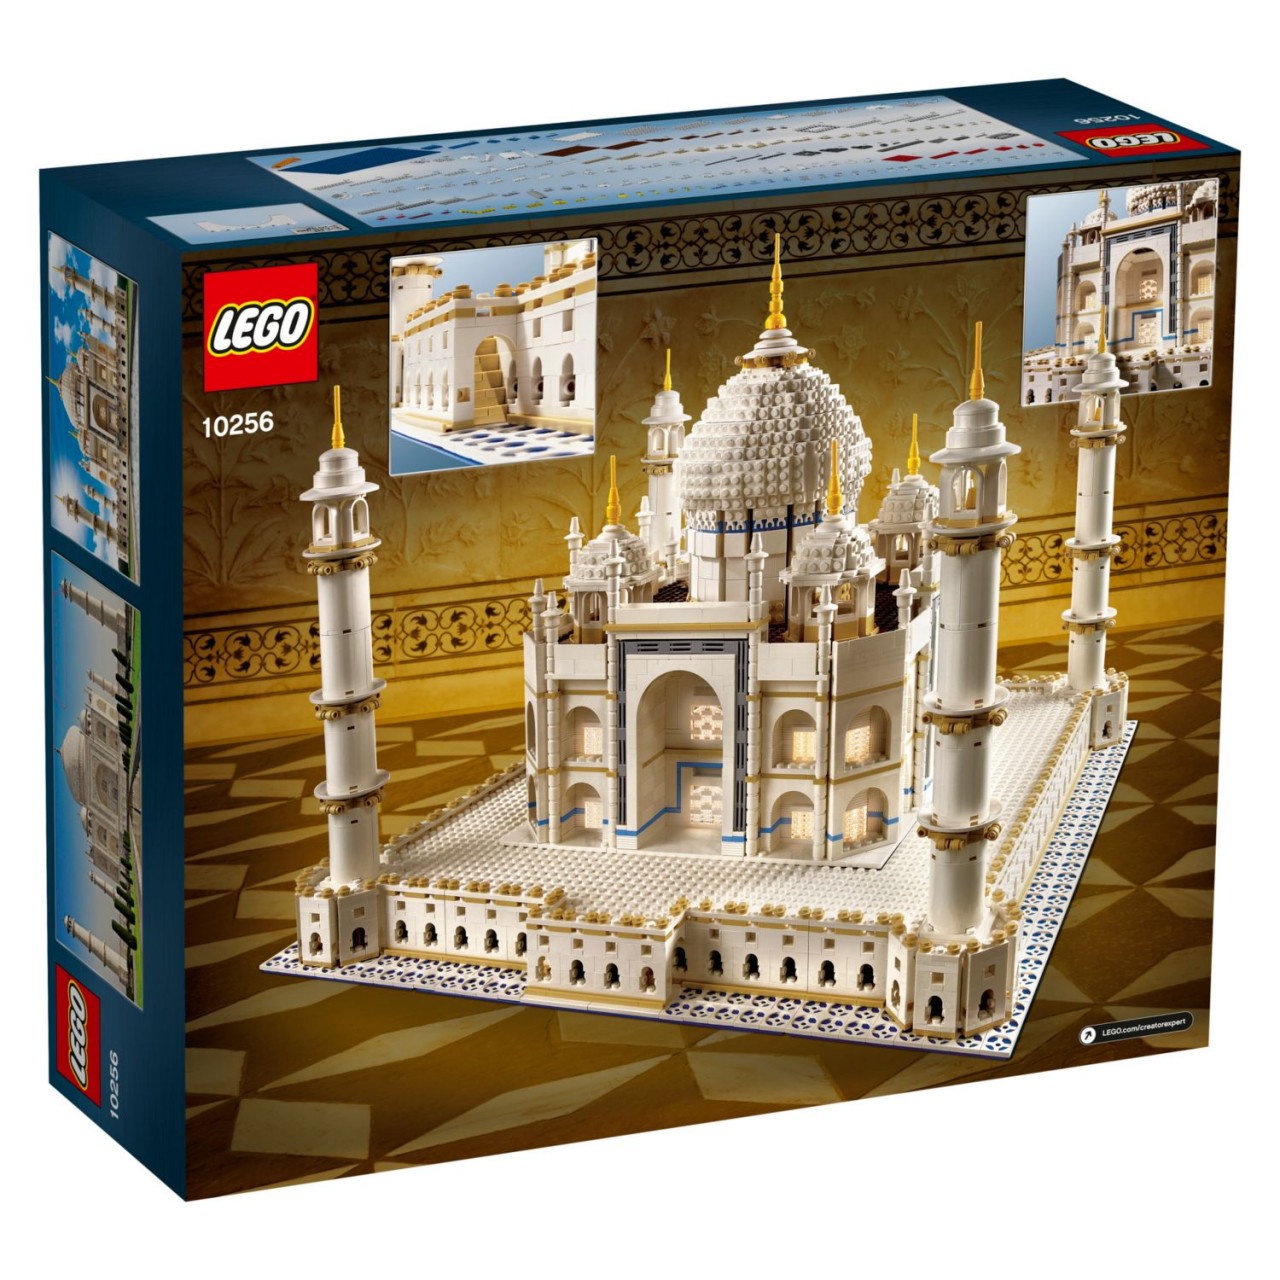 LEGO CREATOR 10256 Taj Mahal